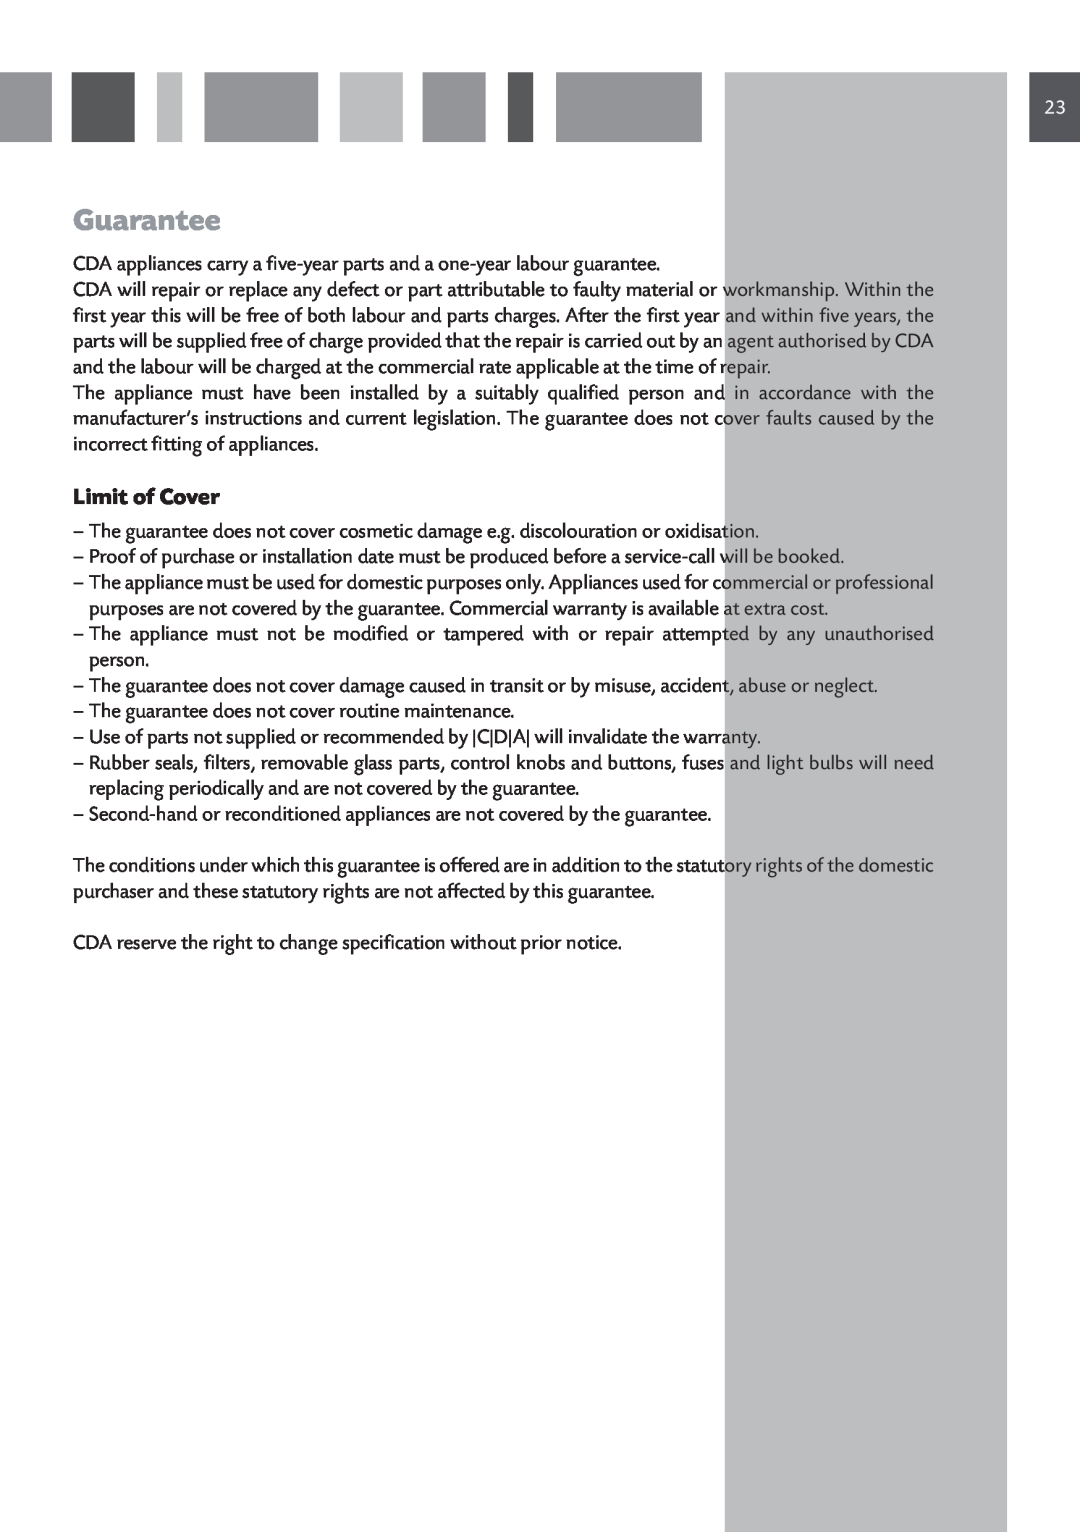 CDA HCG 741, HCG 731 manual Guarantee, Limit of Cover 